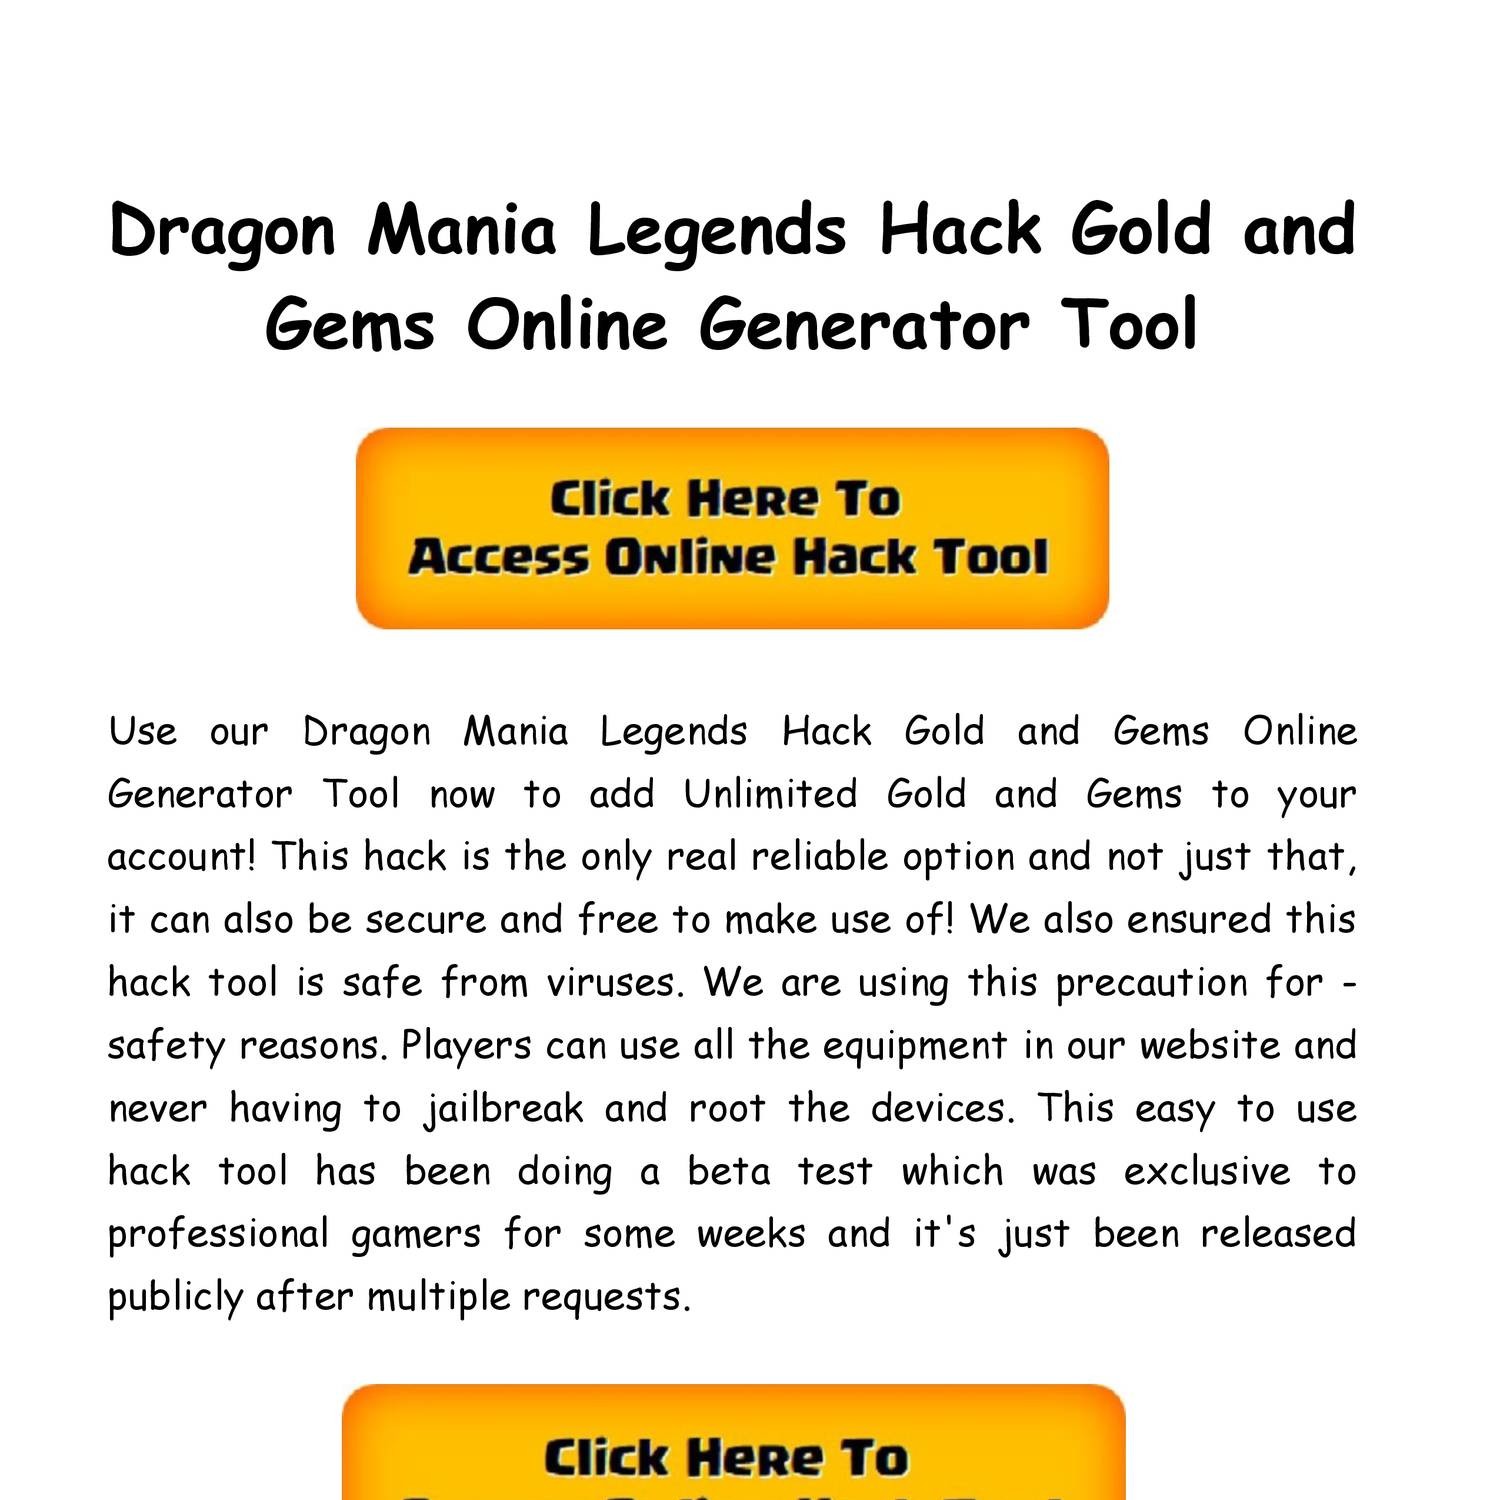 dragon mania legends hacked